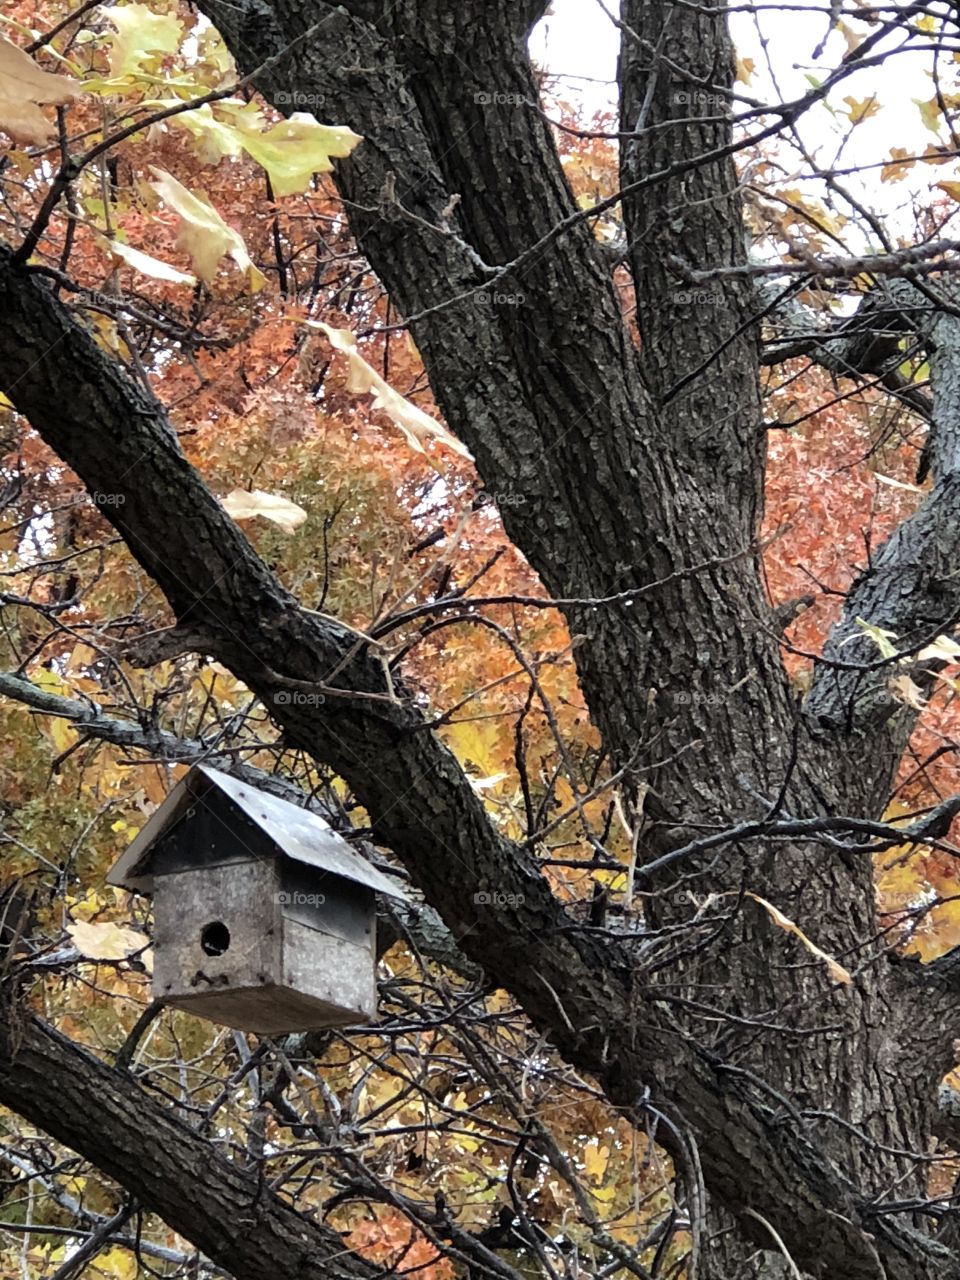 Pretty fall scene with bird house